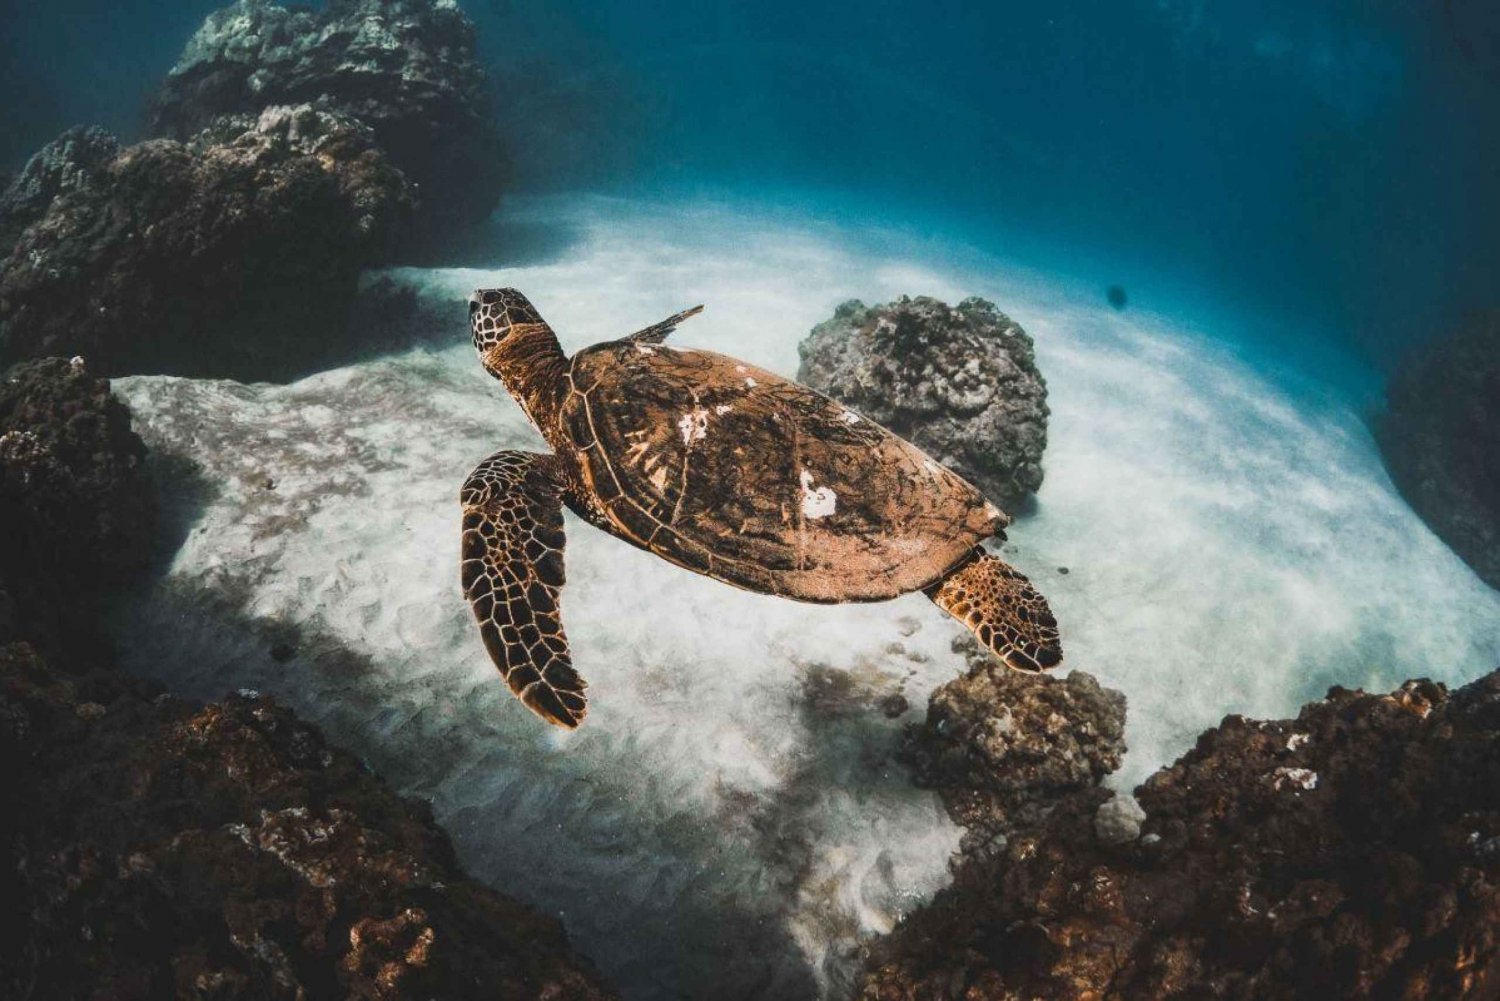 Snorkeling pomeridiano delle tartarughe Alii Nui